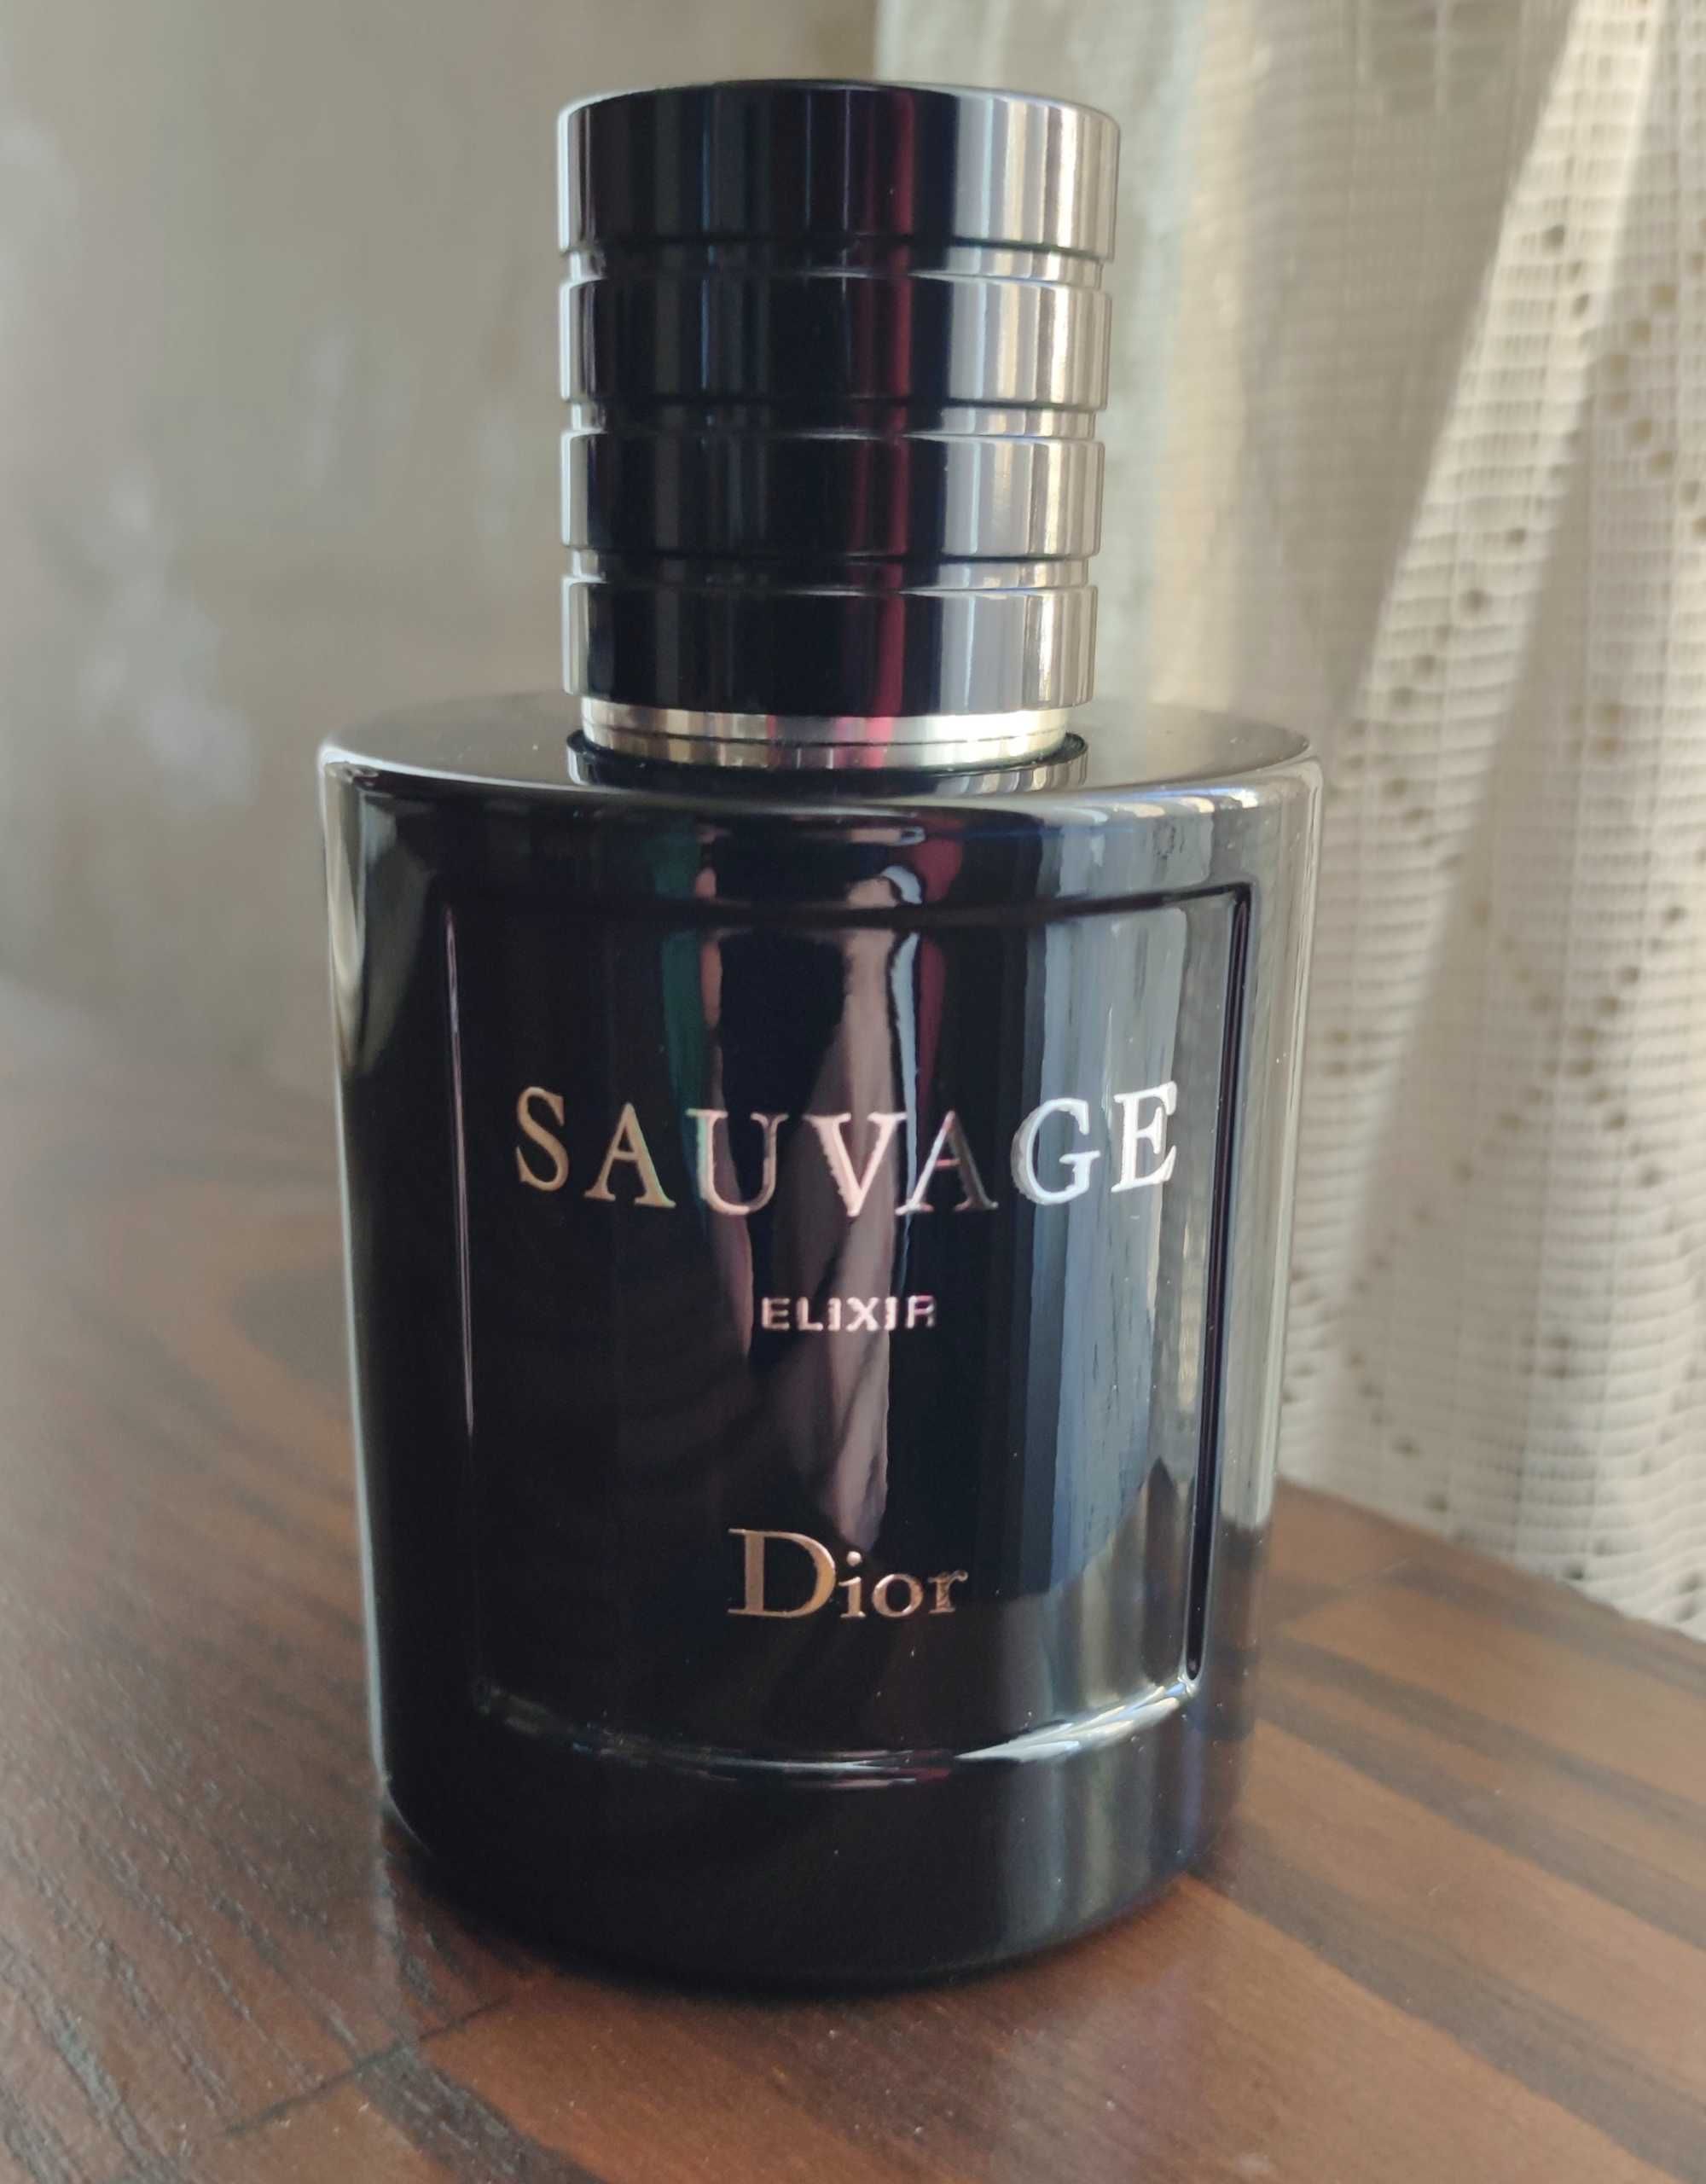 Sauvage Elixir Dior 100 ml